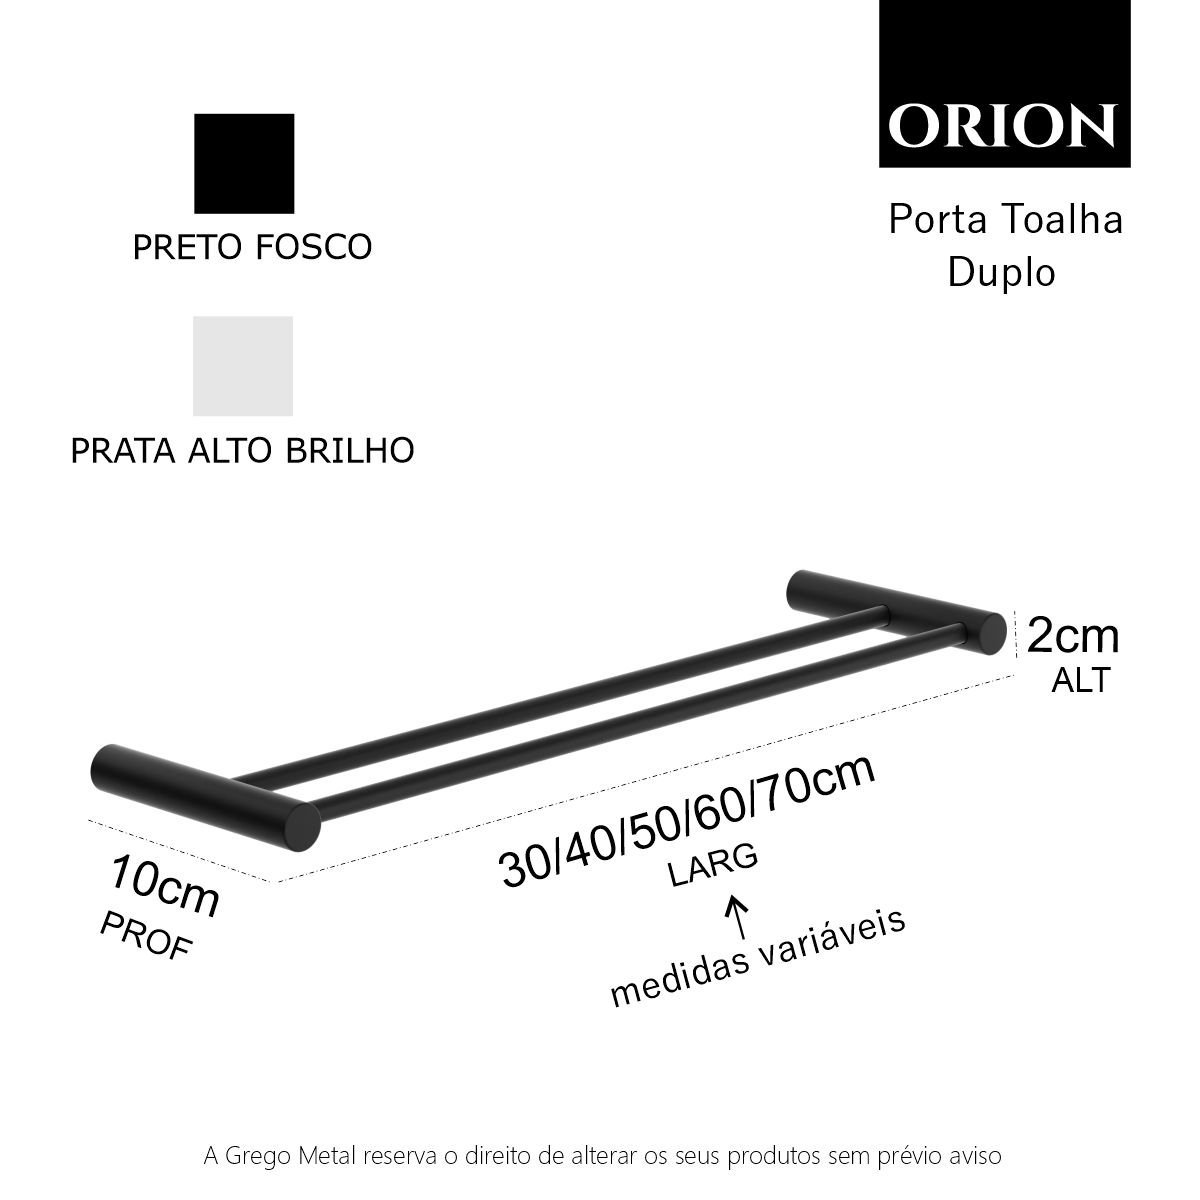 Porta Toalha Duplo para Banheiro Toalheiro 50cm Suporte Redondo Barra Grego Metal Preto Fosco Orion - 5